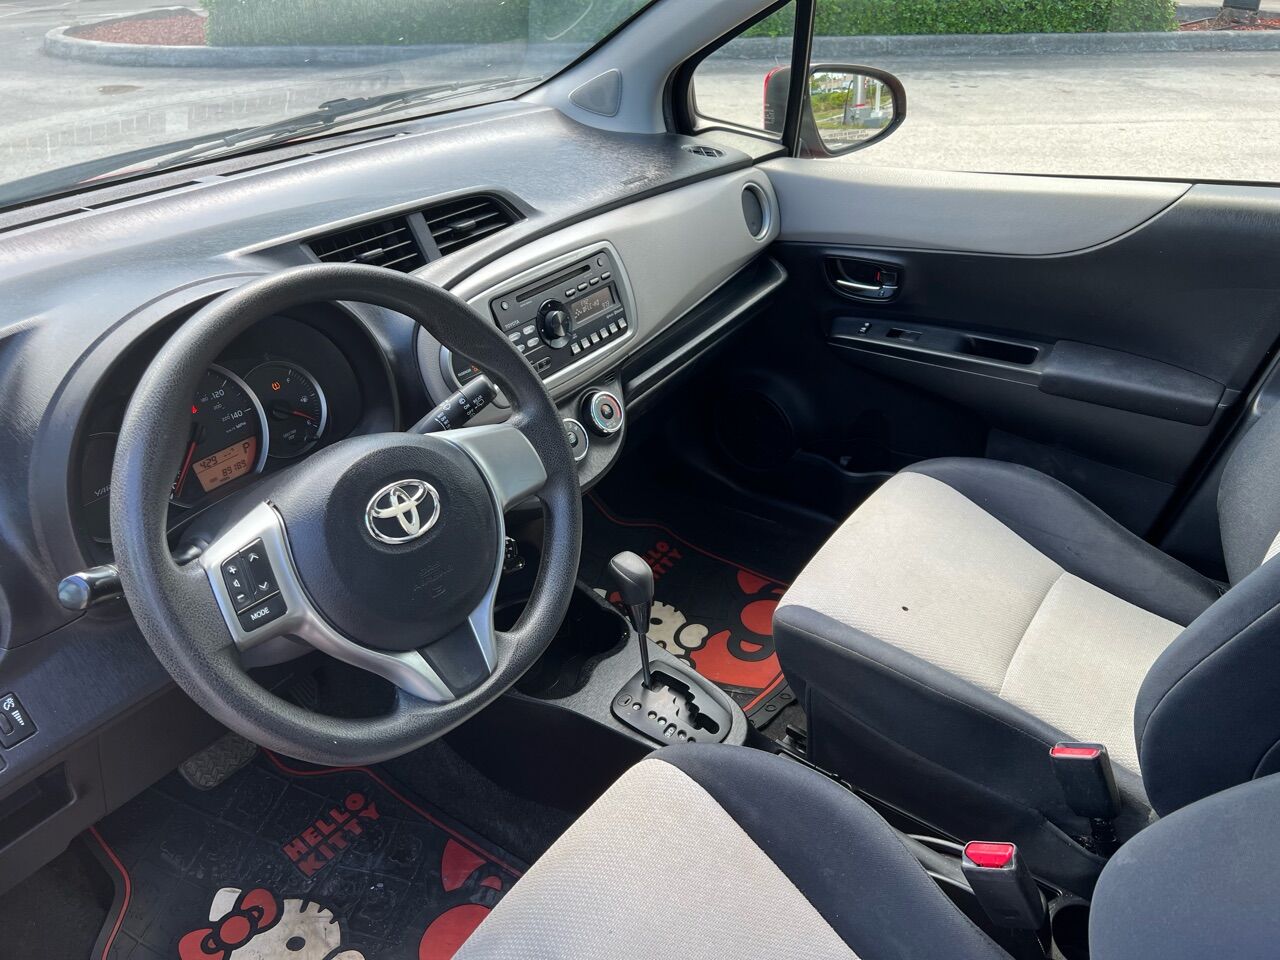 2013 Toyota Yaris Hatchback - $9,900